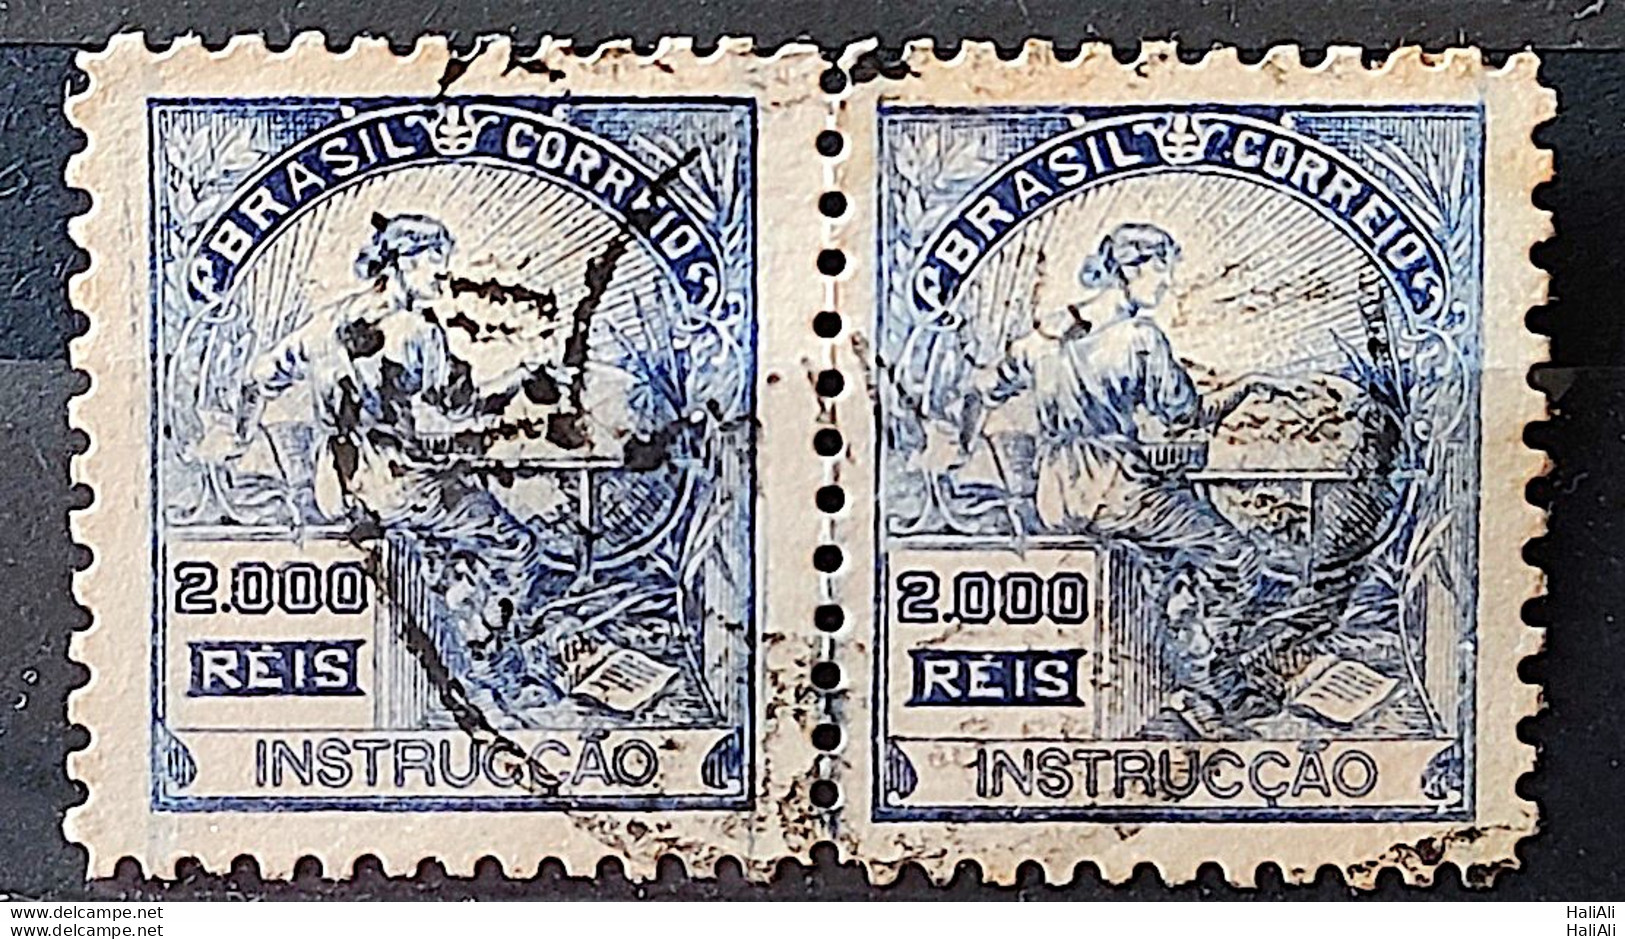 Brazil Regular Stamp Cod RHM 294 Grandpa Instruction 2000 Reis Filigree L 1934 Par Circulated - Gebraucht